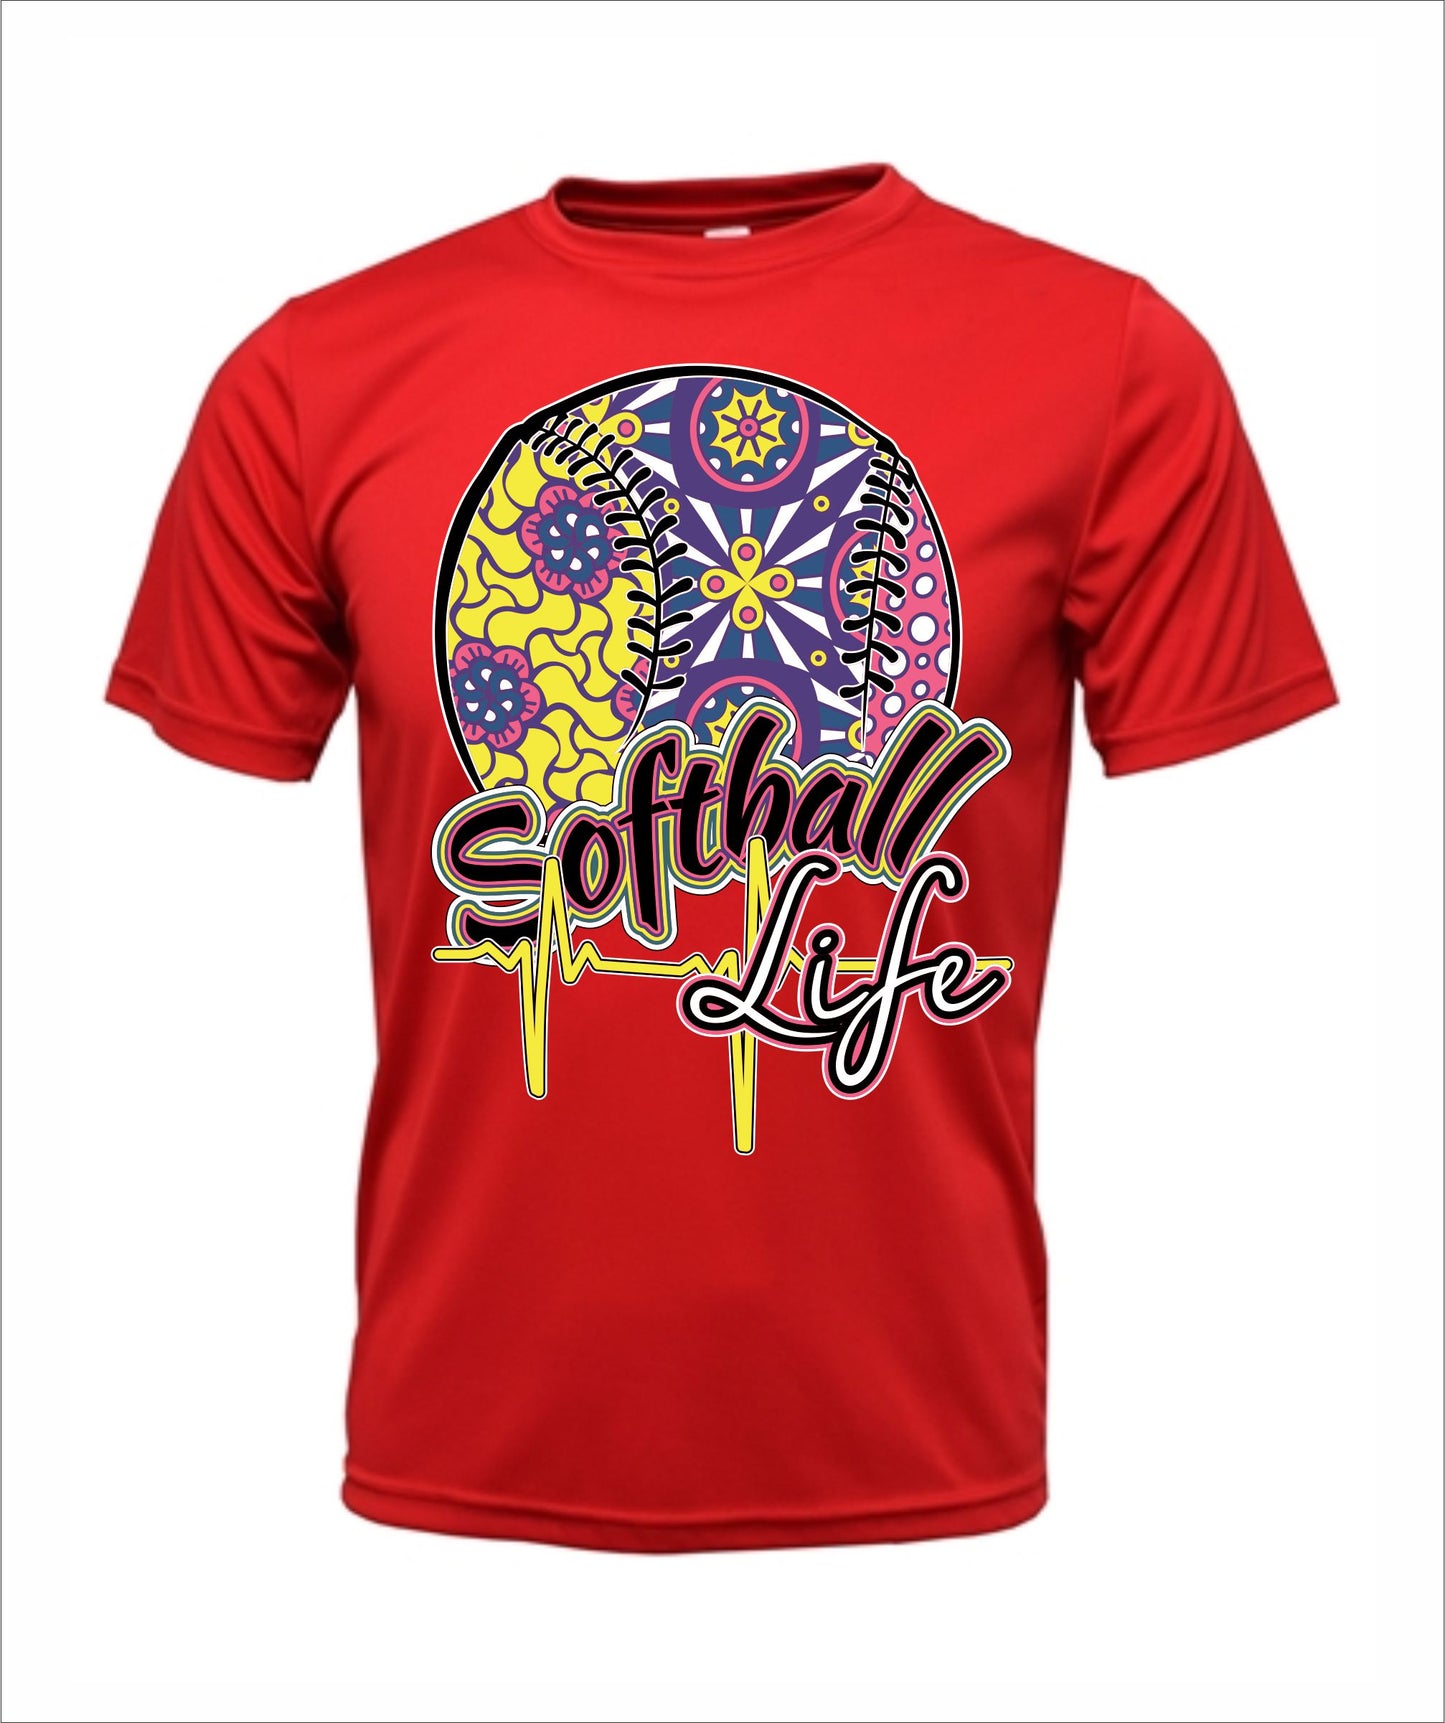 Softball "Life" Cotton T-Shirt